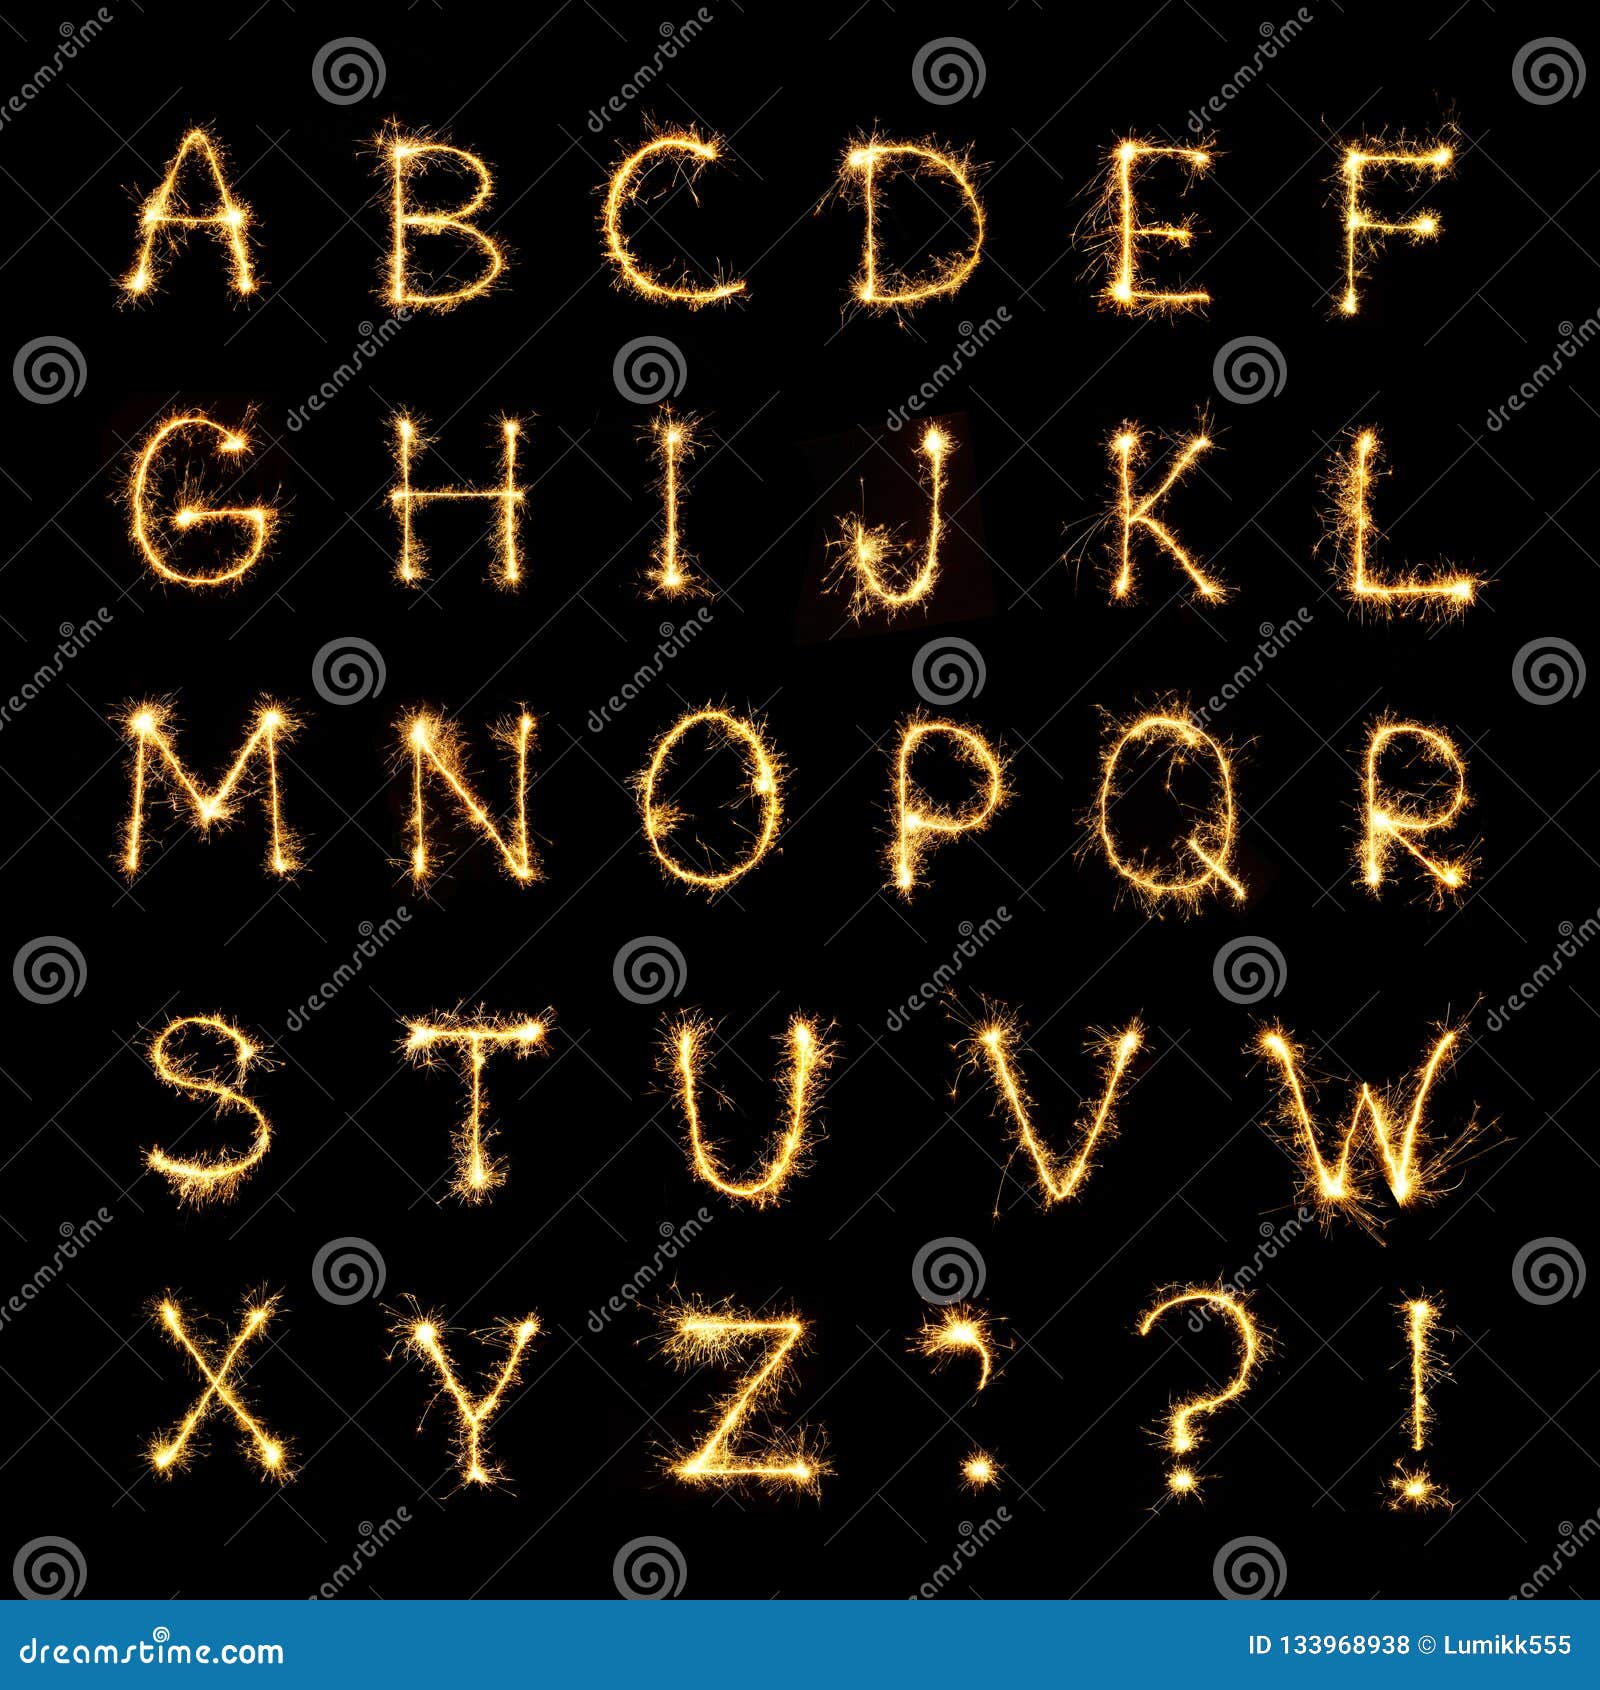 beautiful english alphabet of burning sparkler letters